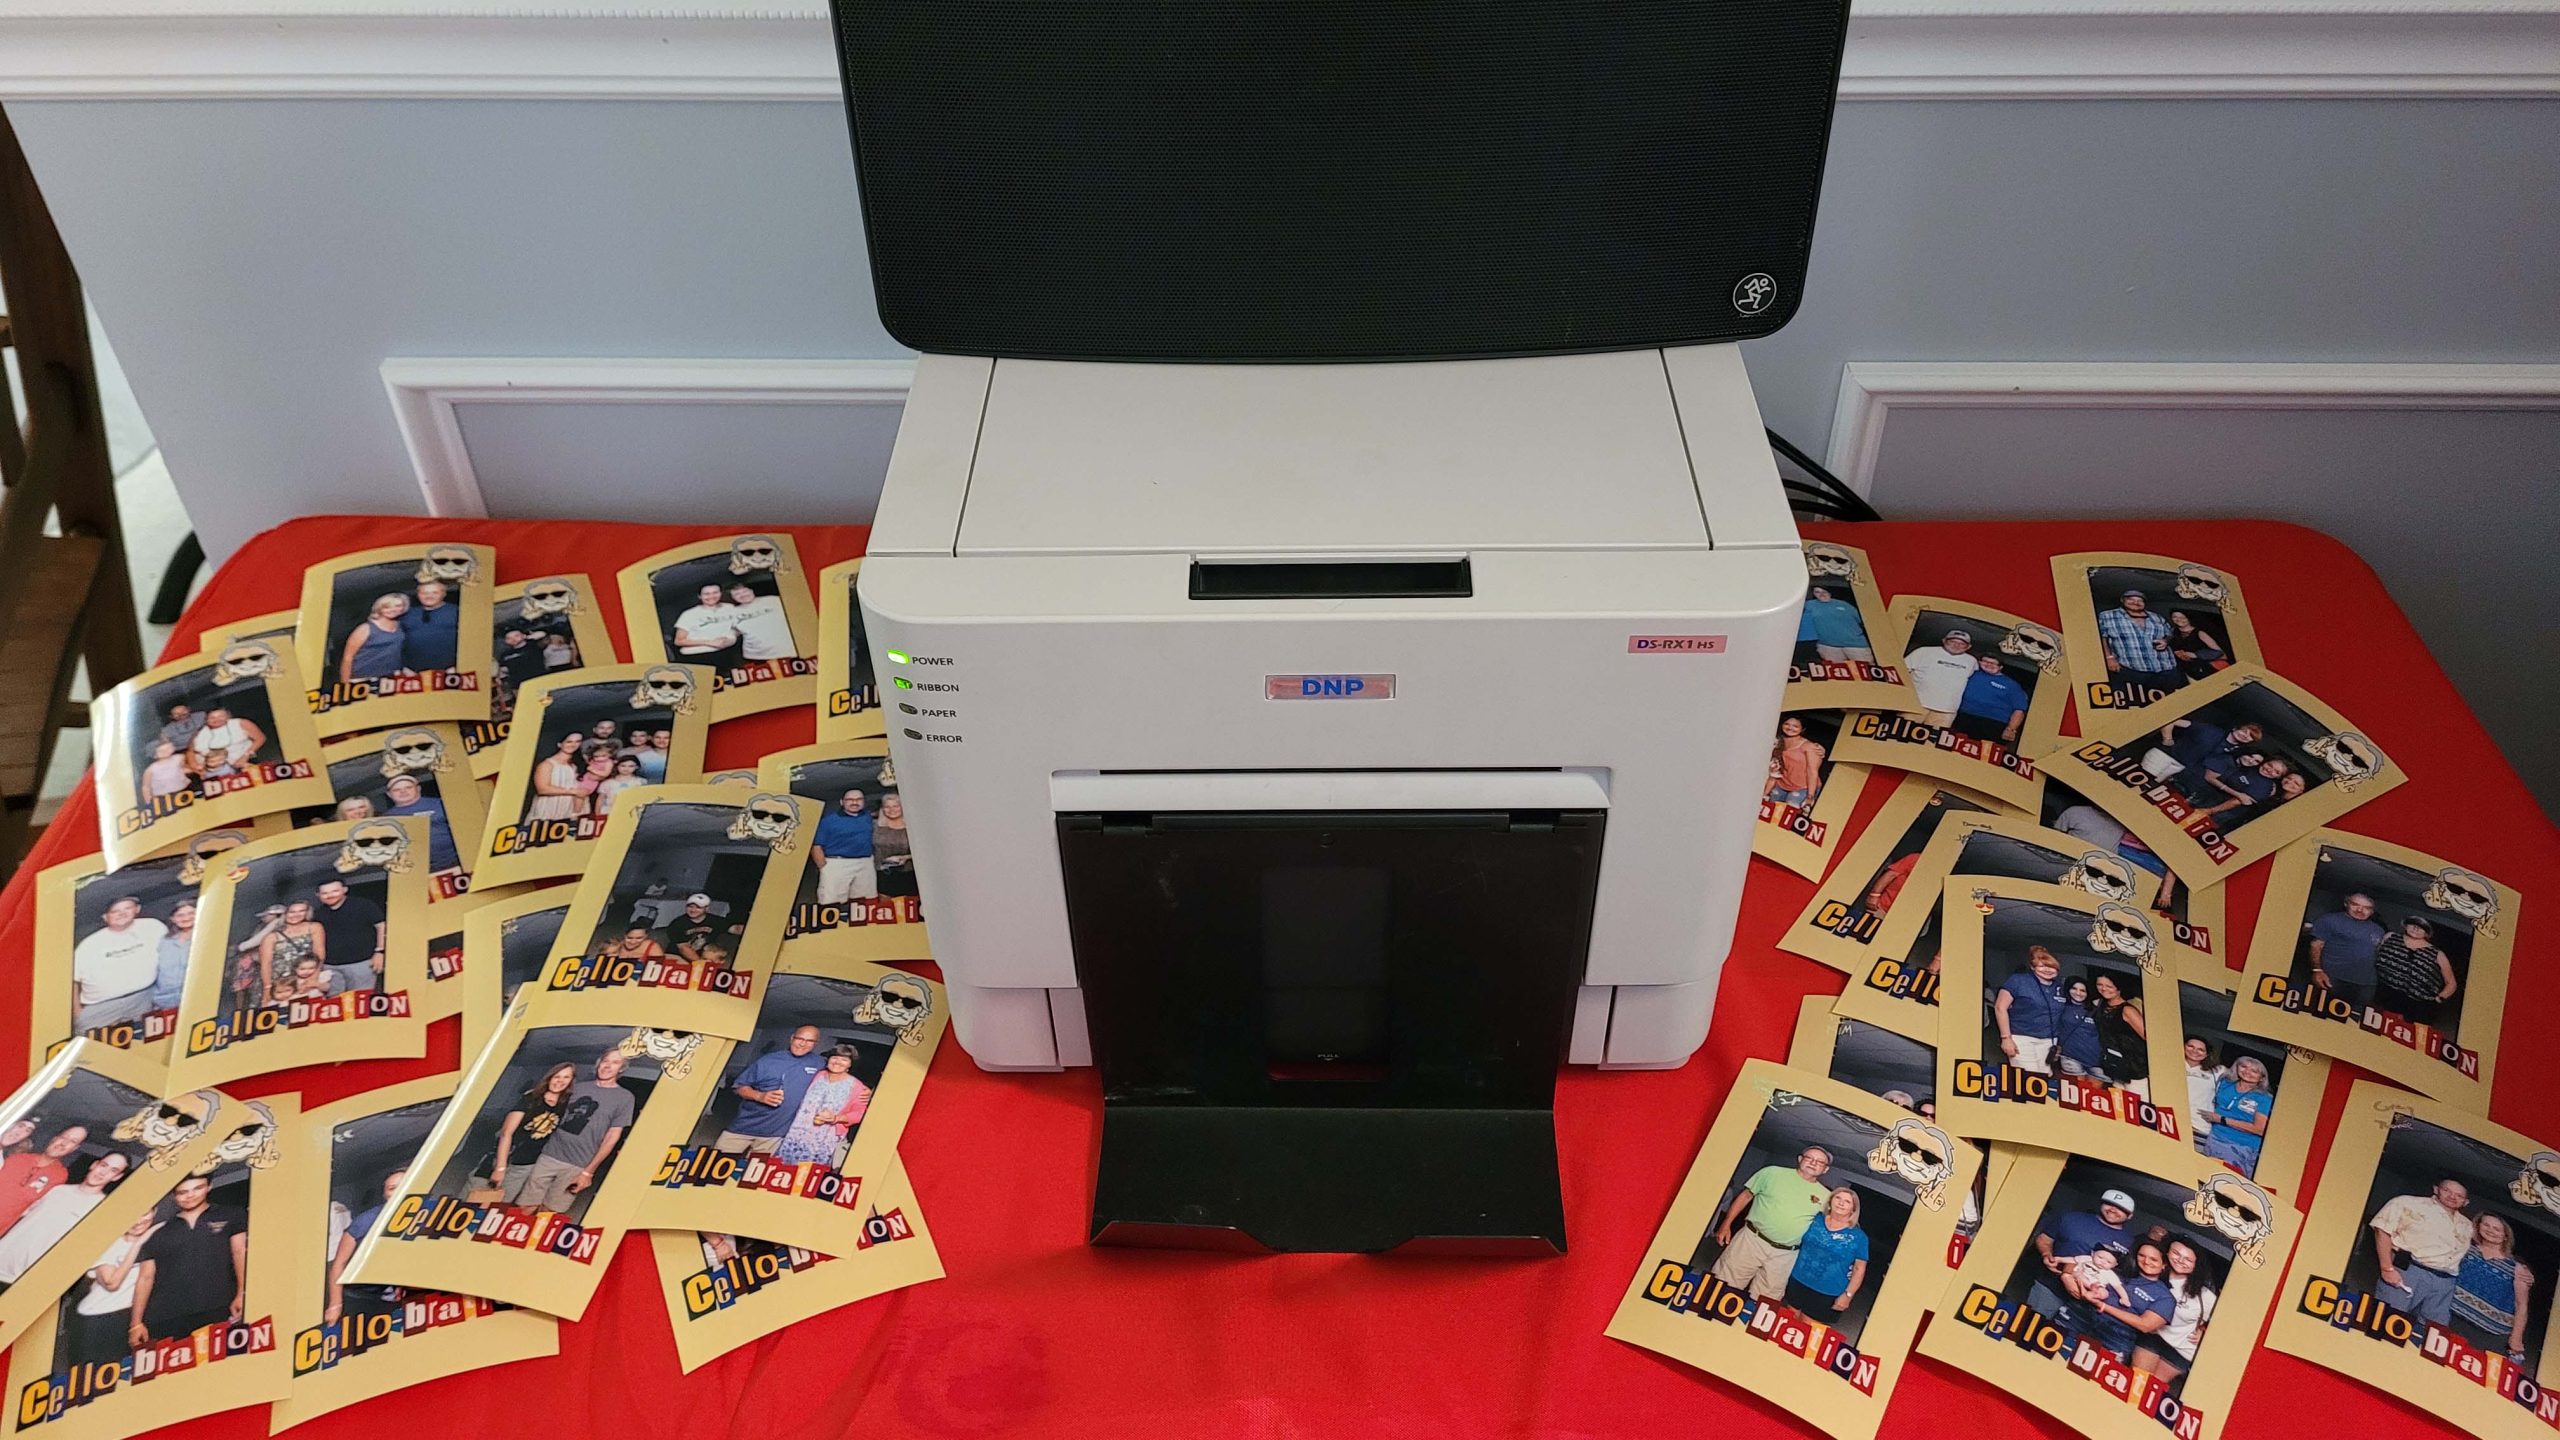 photobooth printer